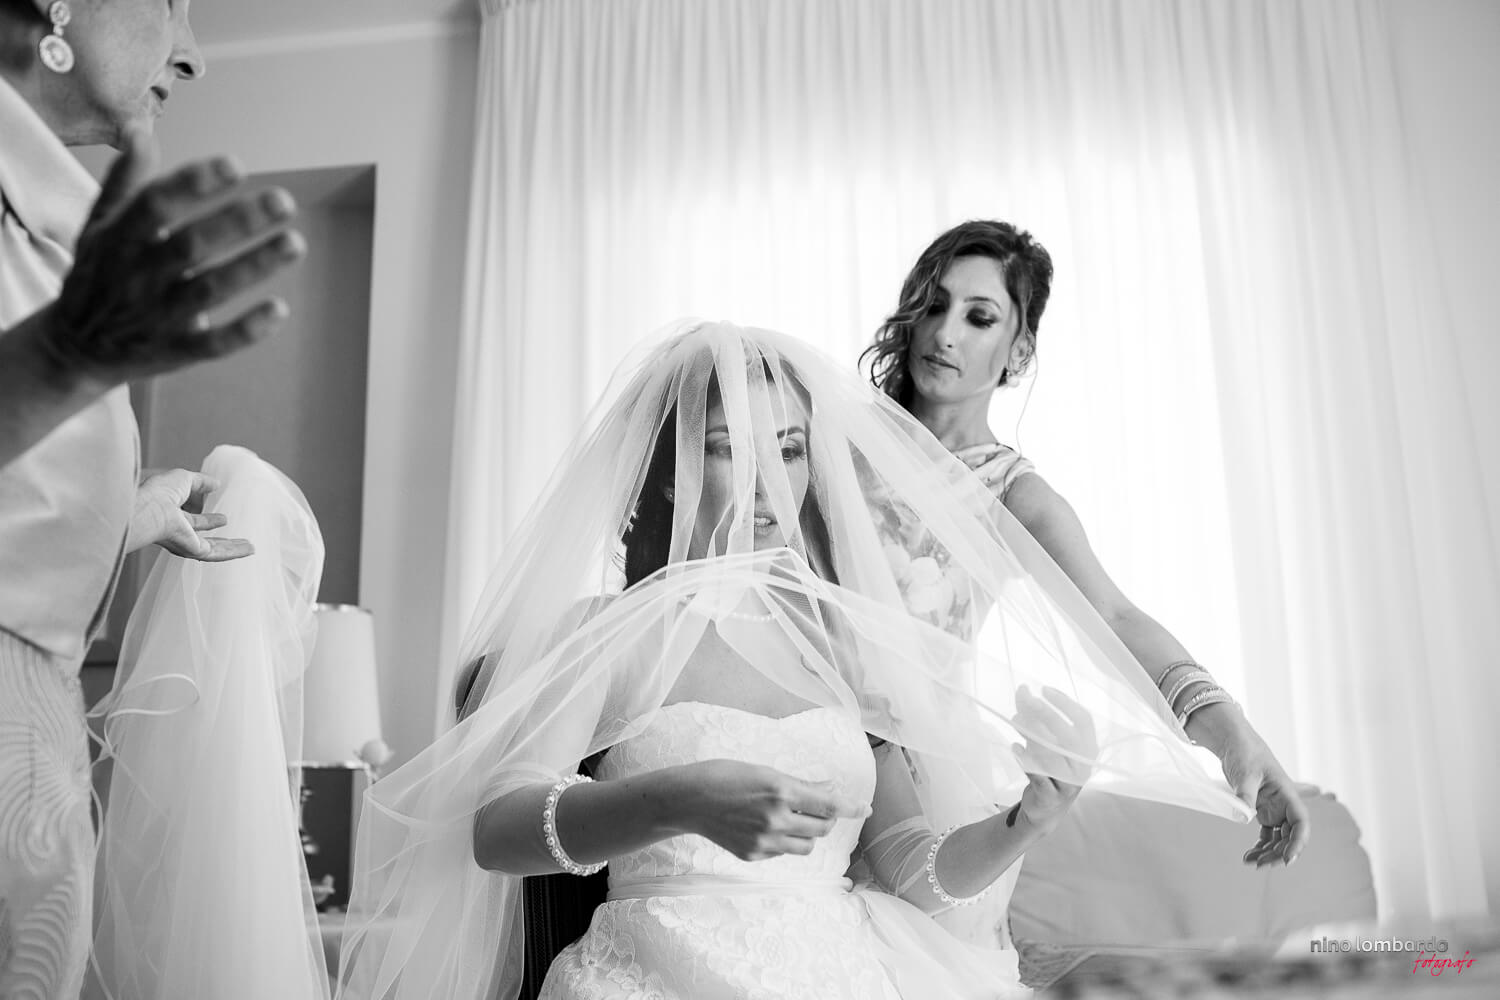 Bride in Castellammare by Nino Lombardo photographer